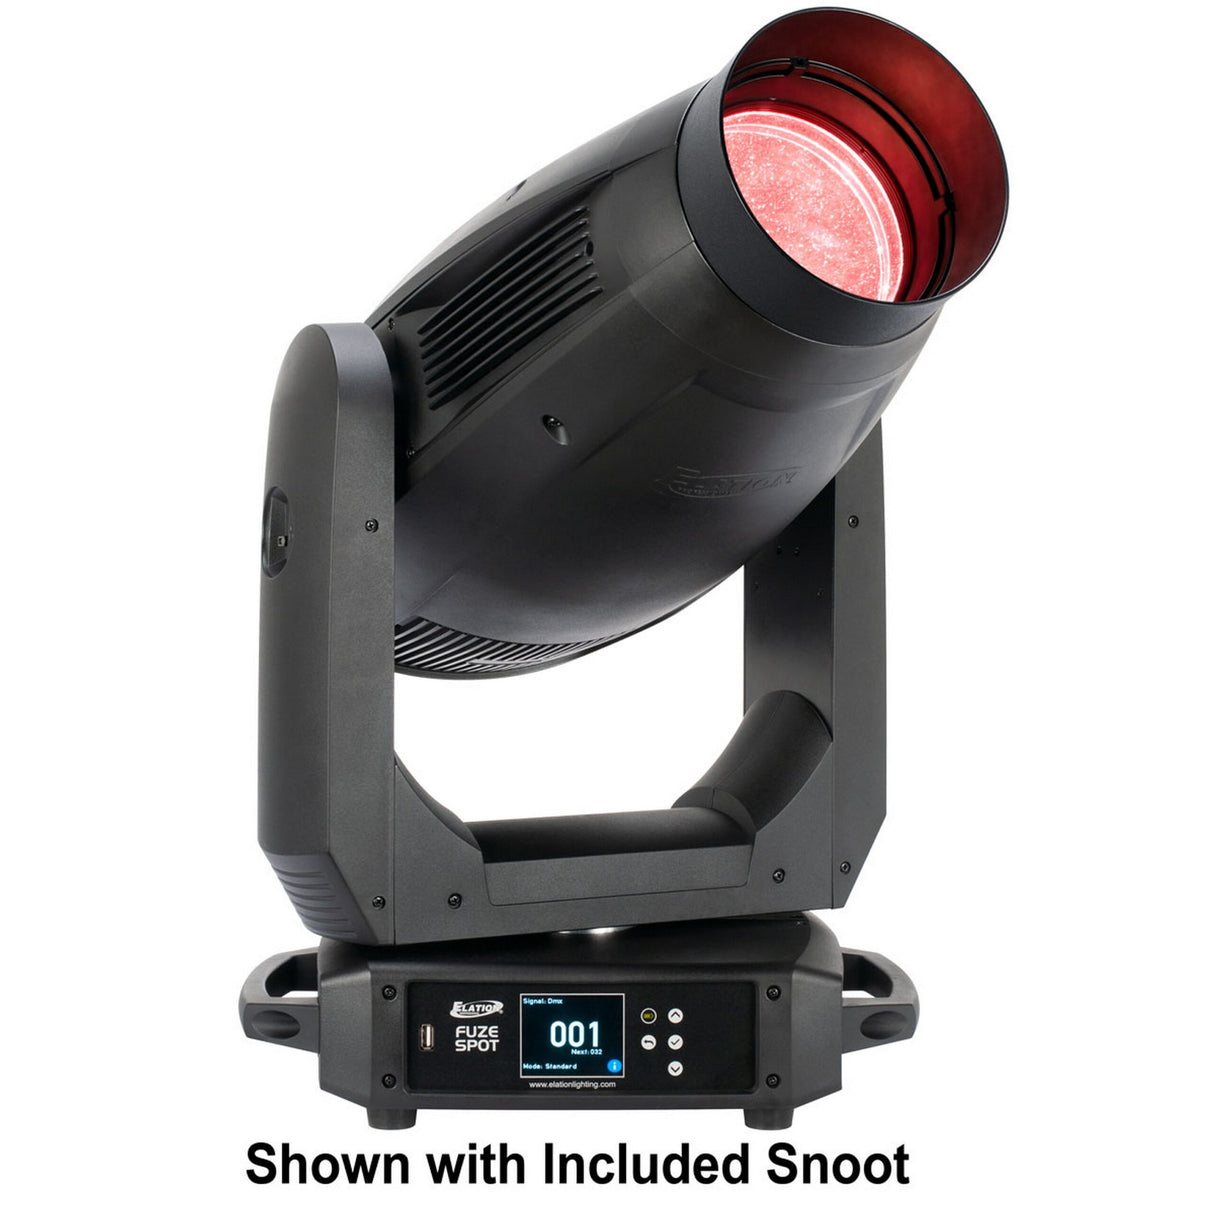 Elation Fuze Spot 305 Watt RGBMA Full Color LED Spot Light Fixture